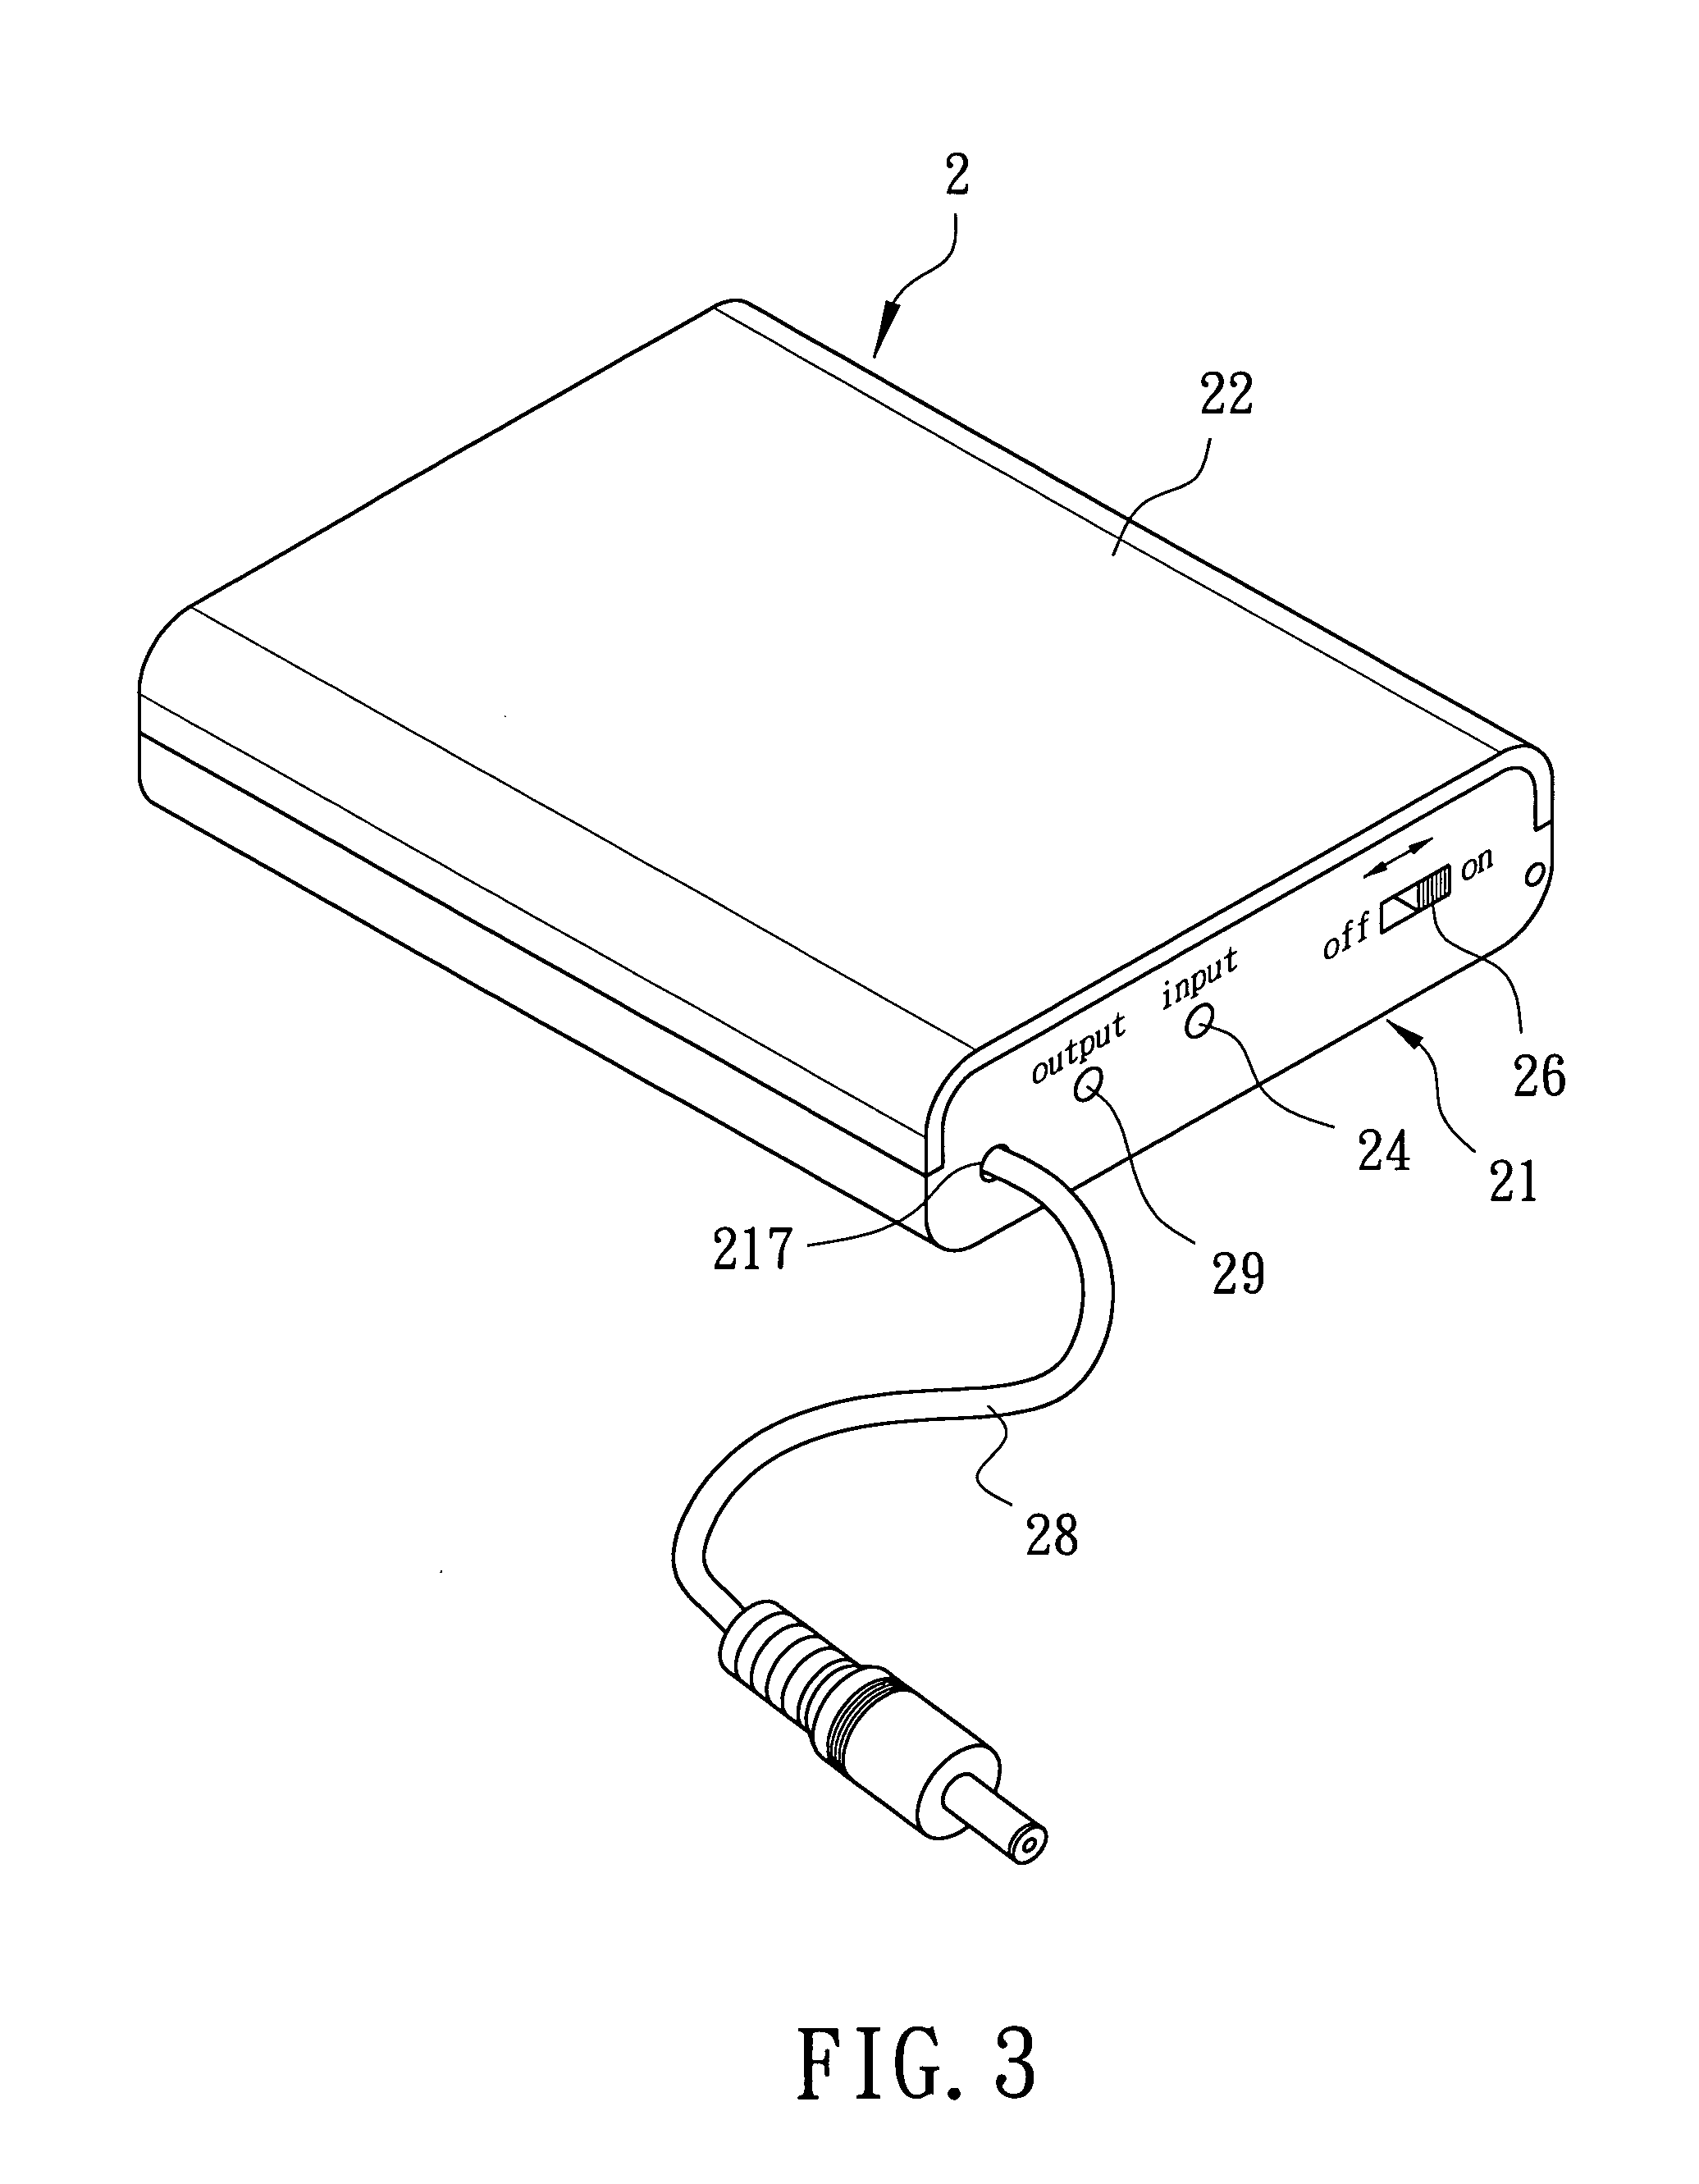 Portable power supplying device